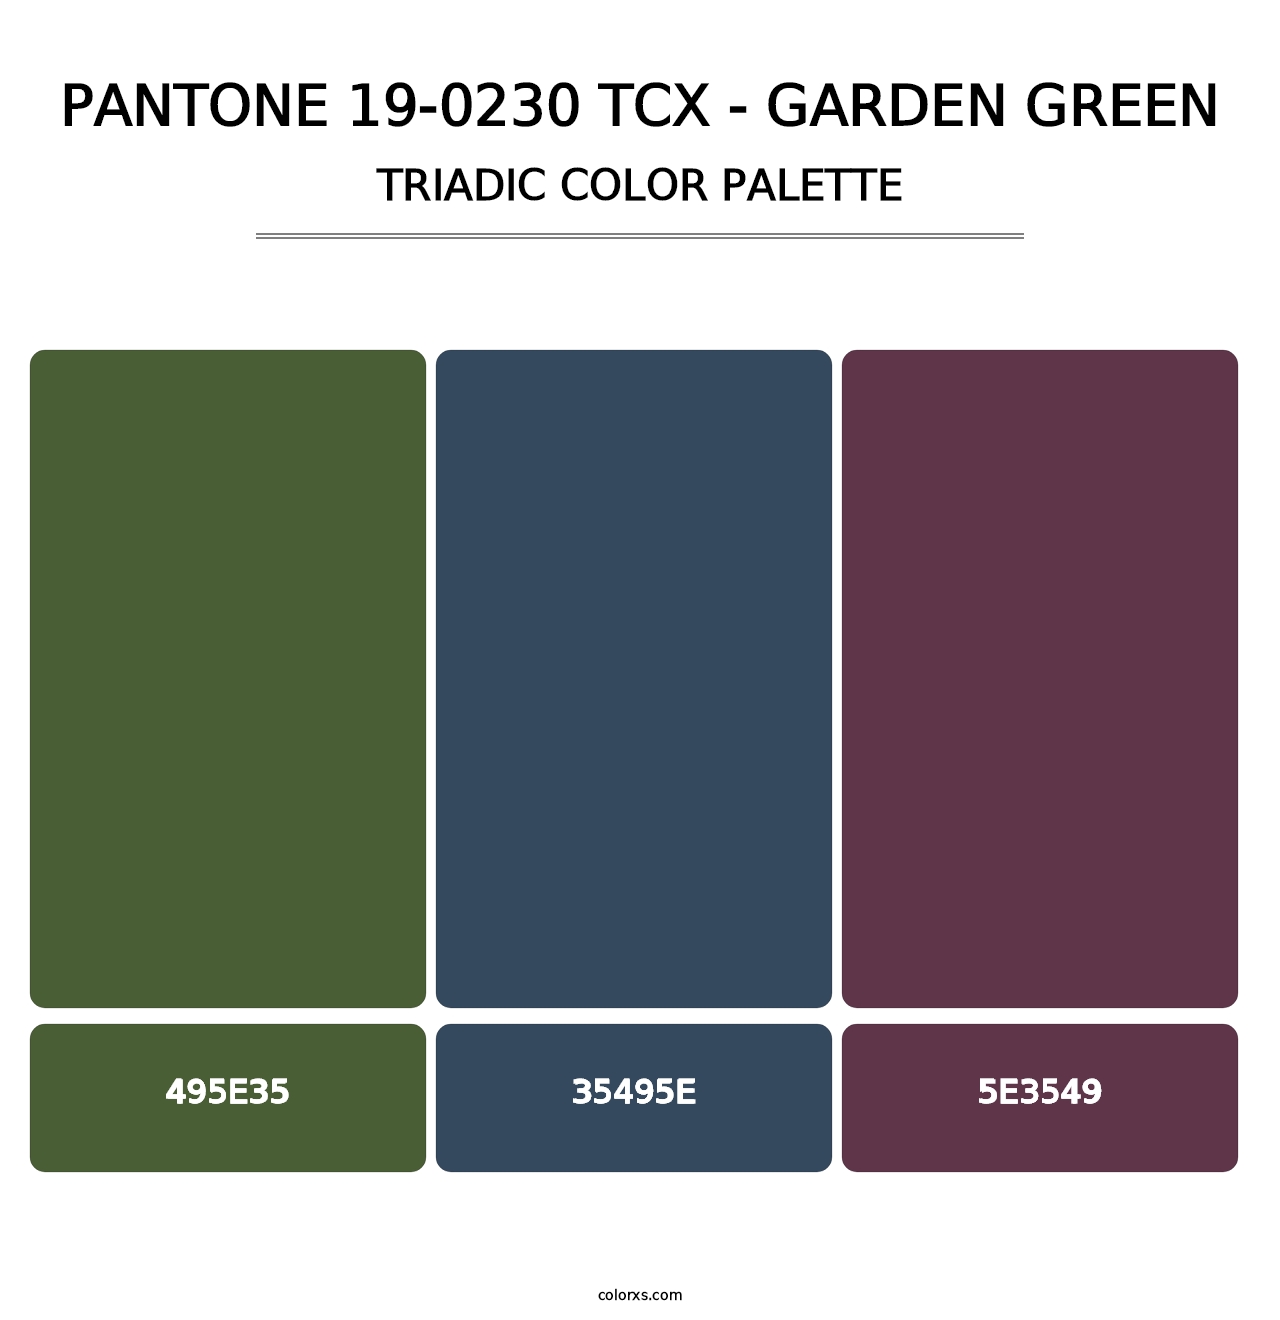 PANTONE 19-0230 TCX - Garden Green - Triadic Color Palette